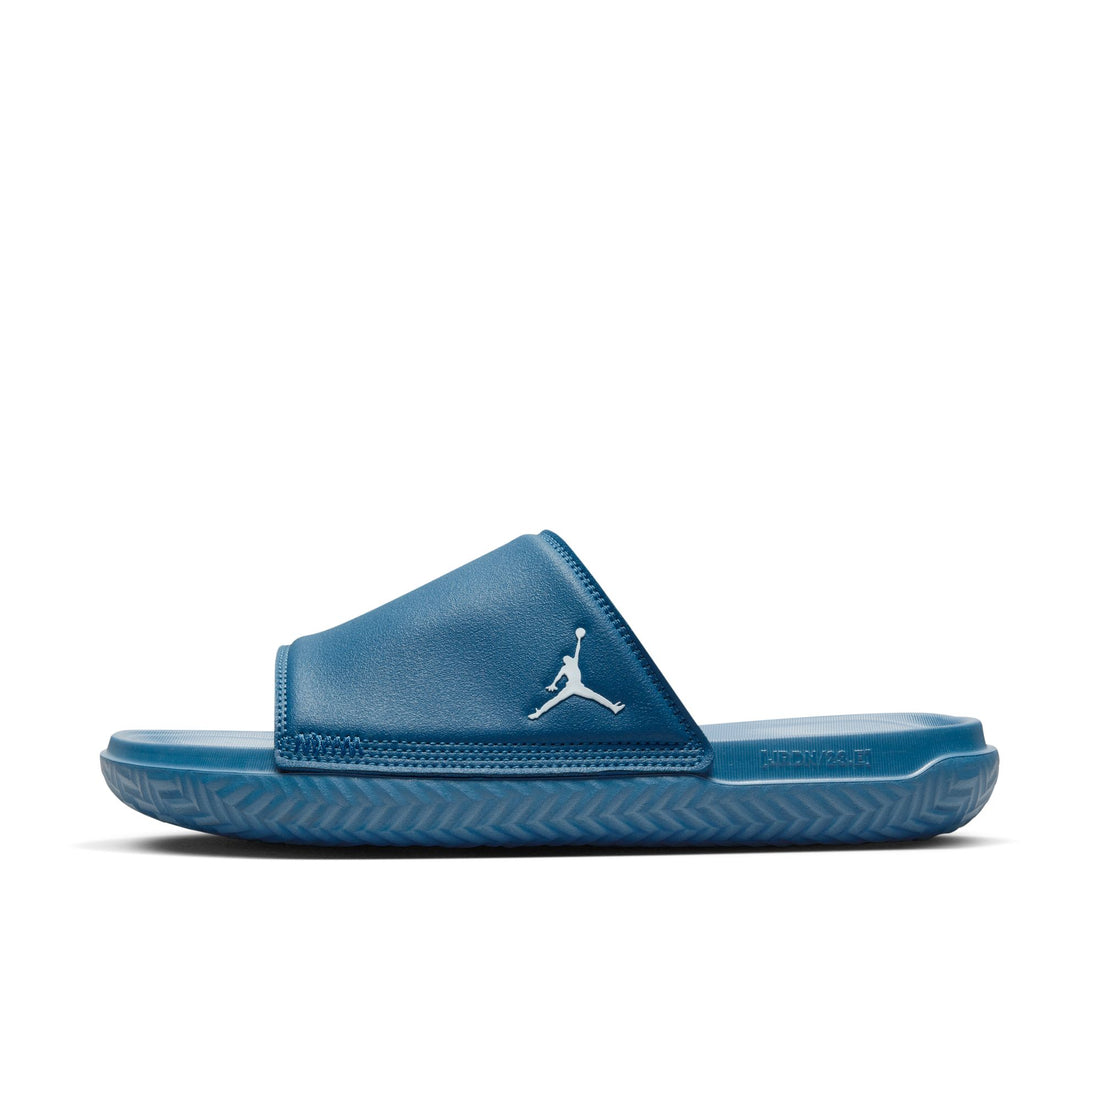 Air Jordan Play Slide (True Blue/White)